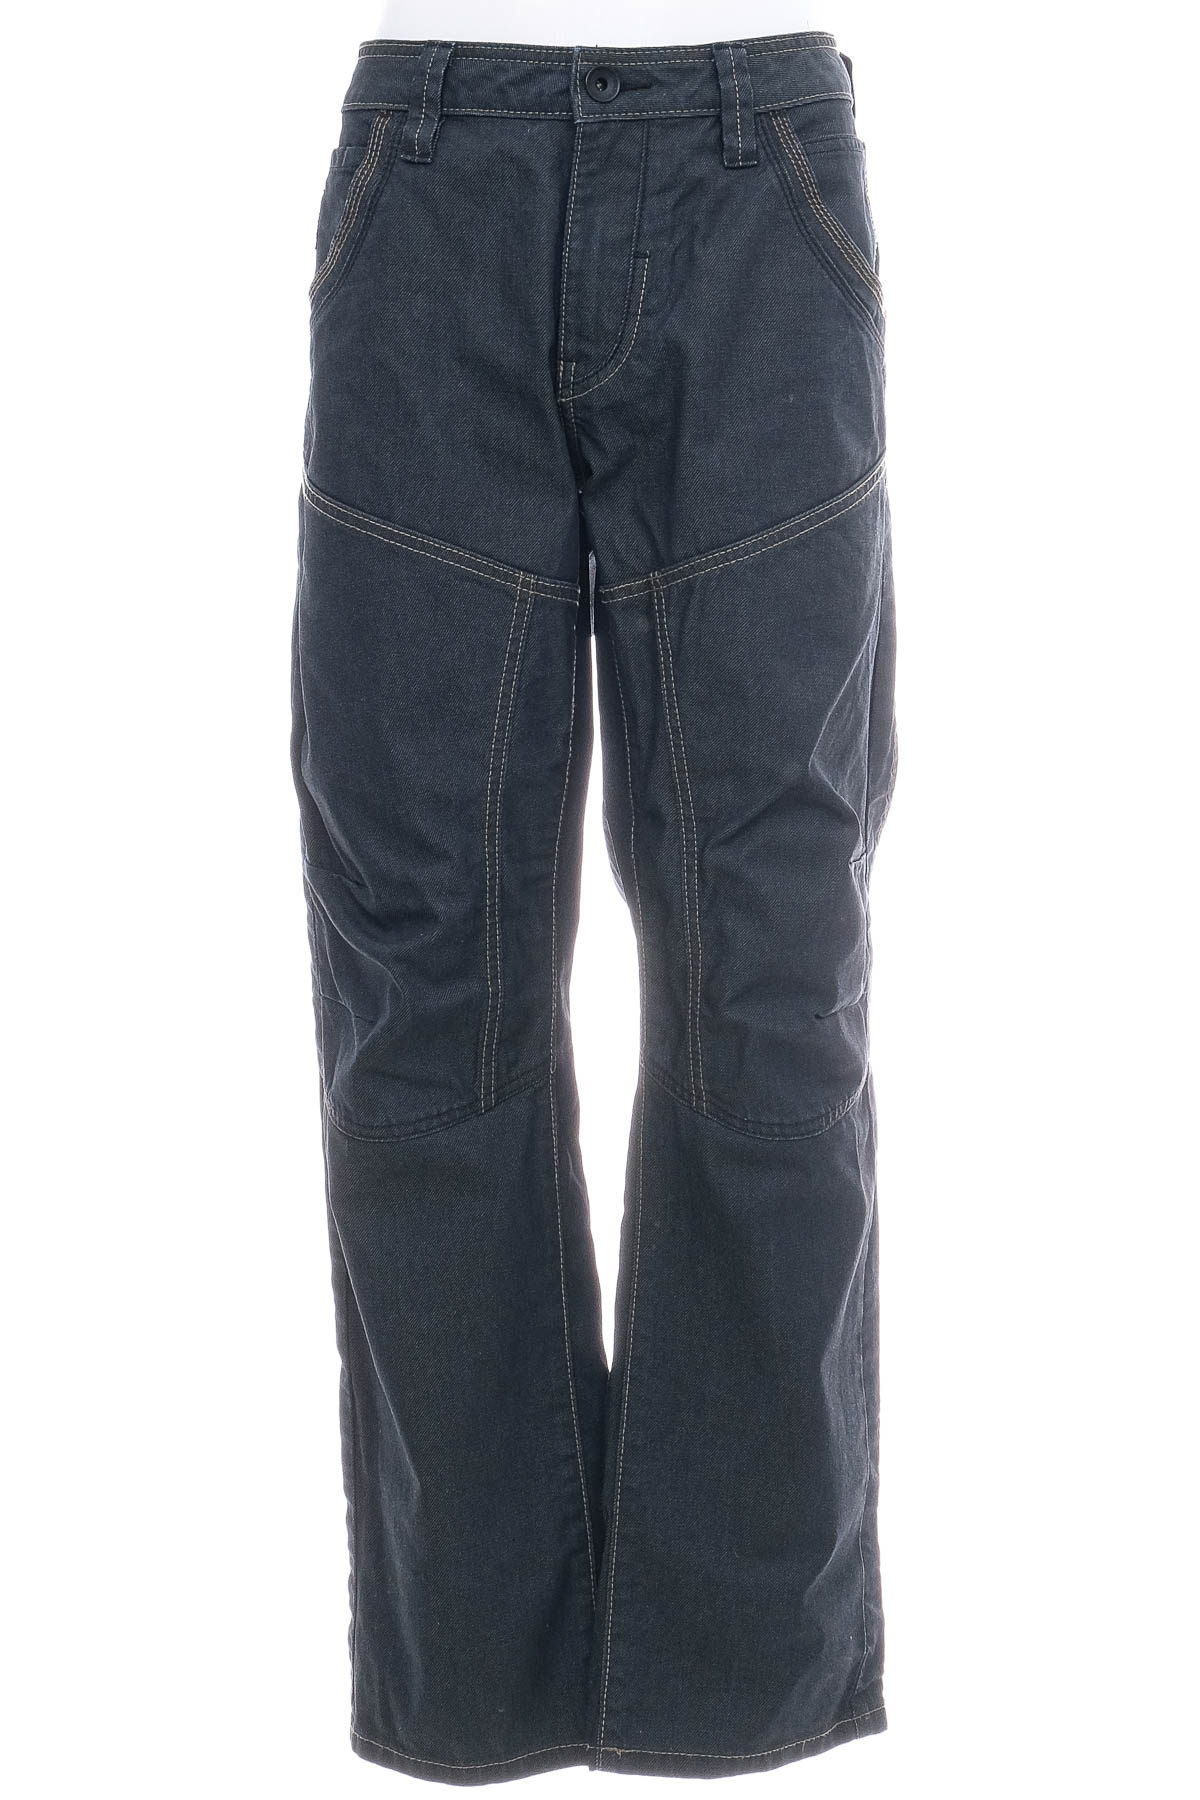 Men's jeans - Angelo Litrico - 0